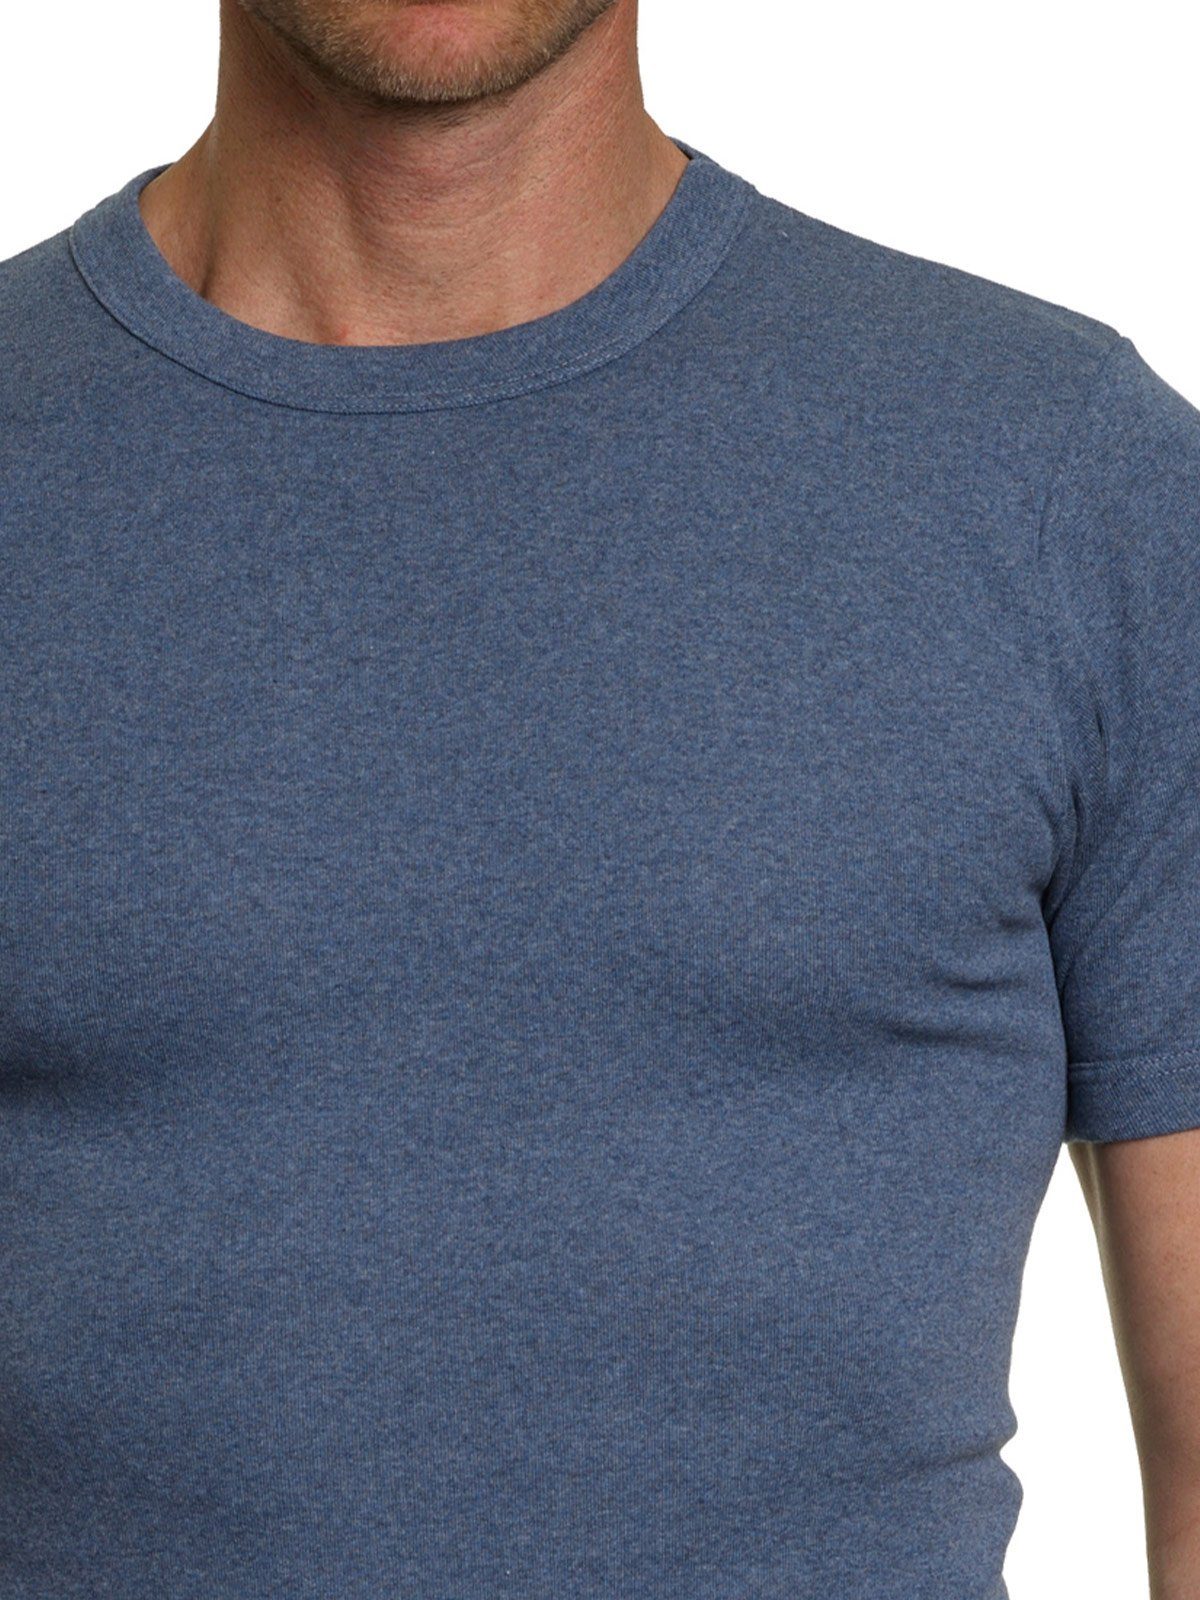 Workerwear KUMPF blau-melange Markenqualität 1-St) T-Shirt Arm Unterziehshirt 1/2 (Stück, Herren hohe